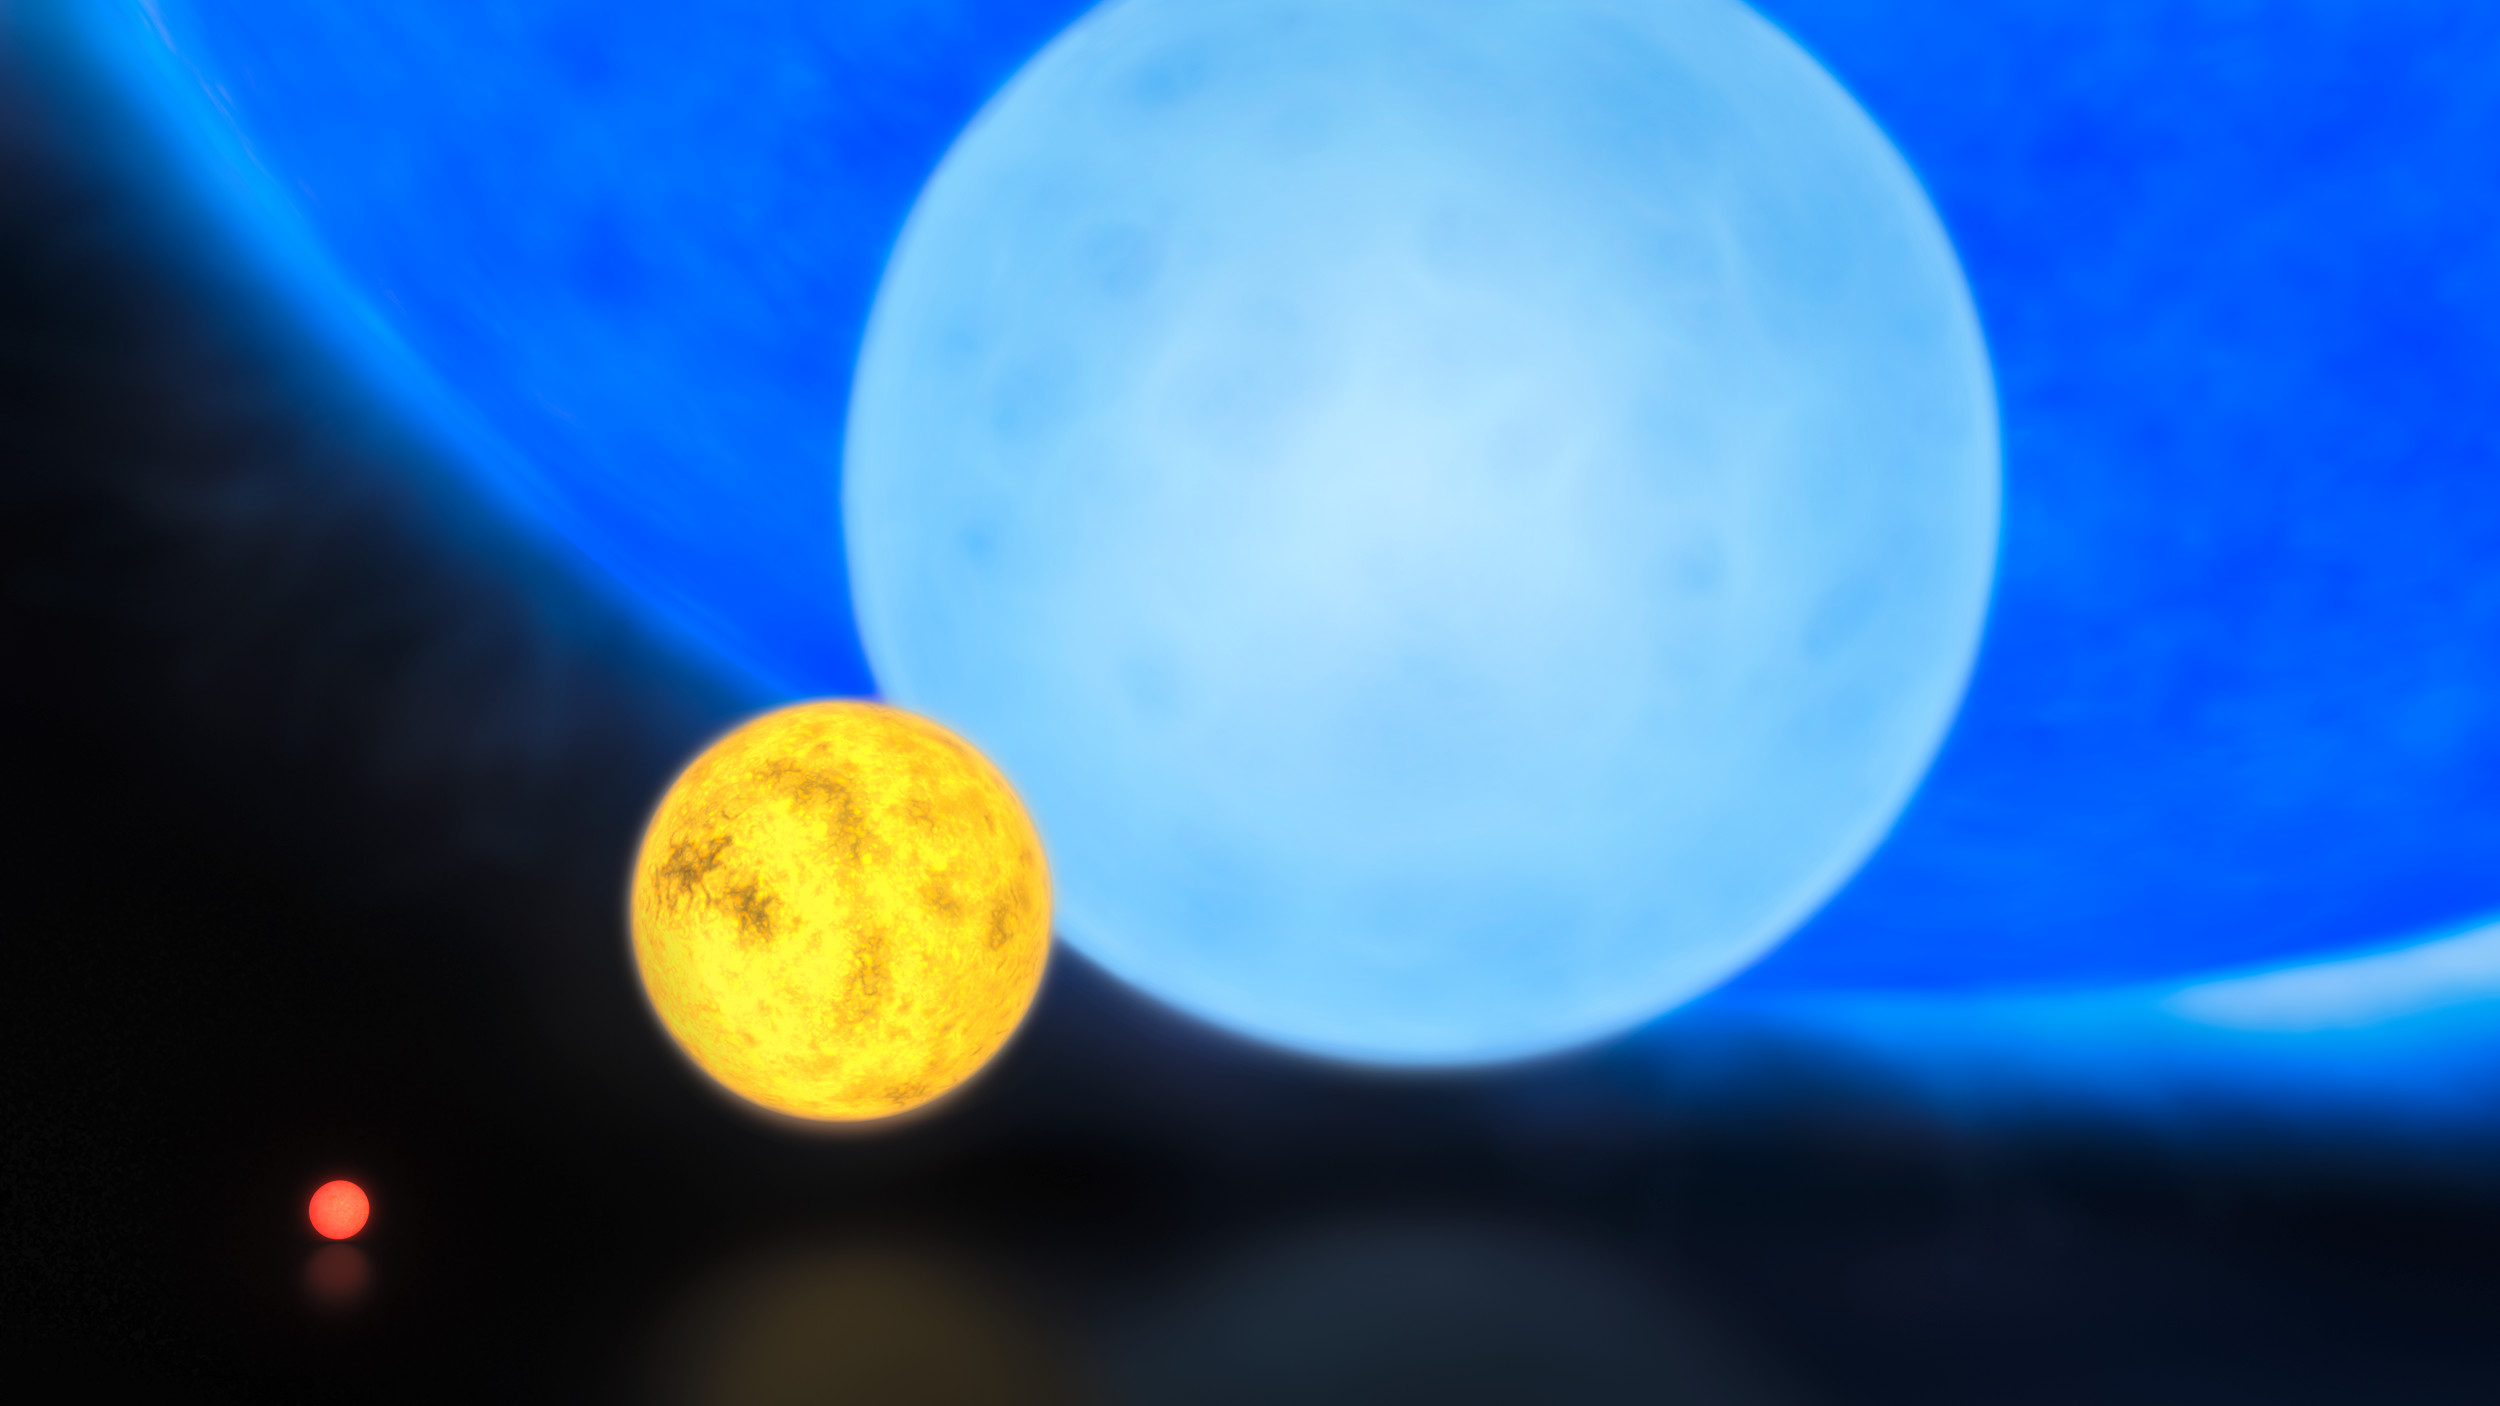 Голубой сверхгигант. Звезда r136a1 синий гипергигант. R136a1 звезда. Голубой гипергигант звезда r136a1. Самая большая звезда r136a1.